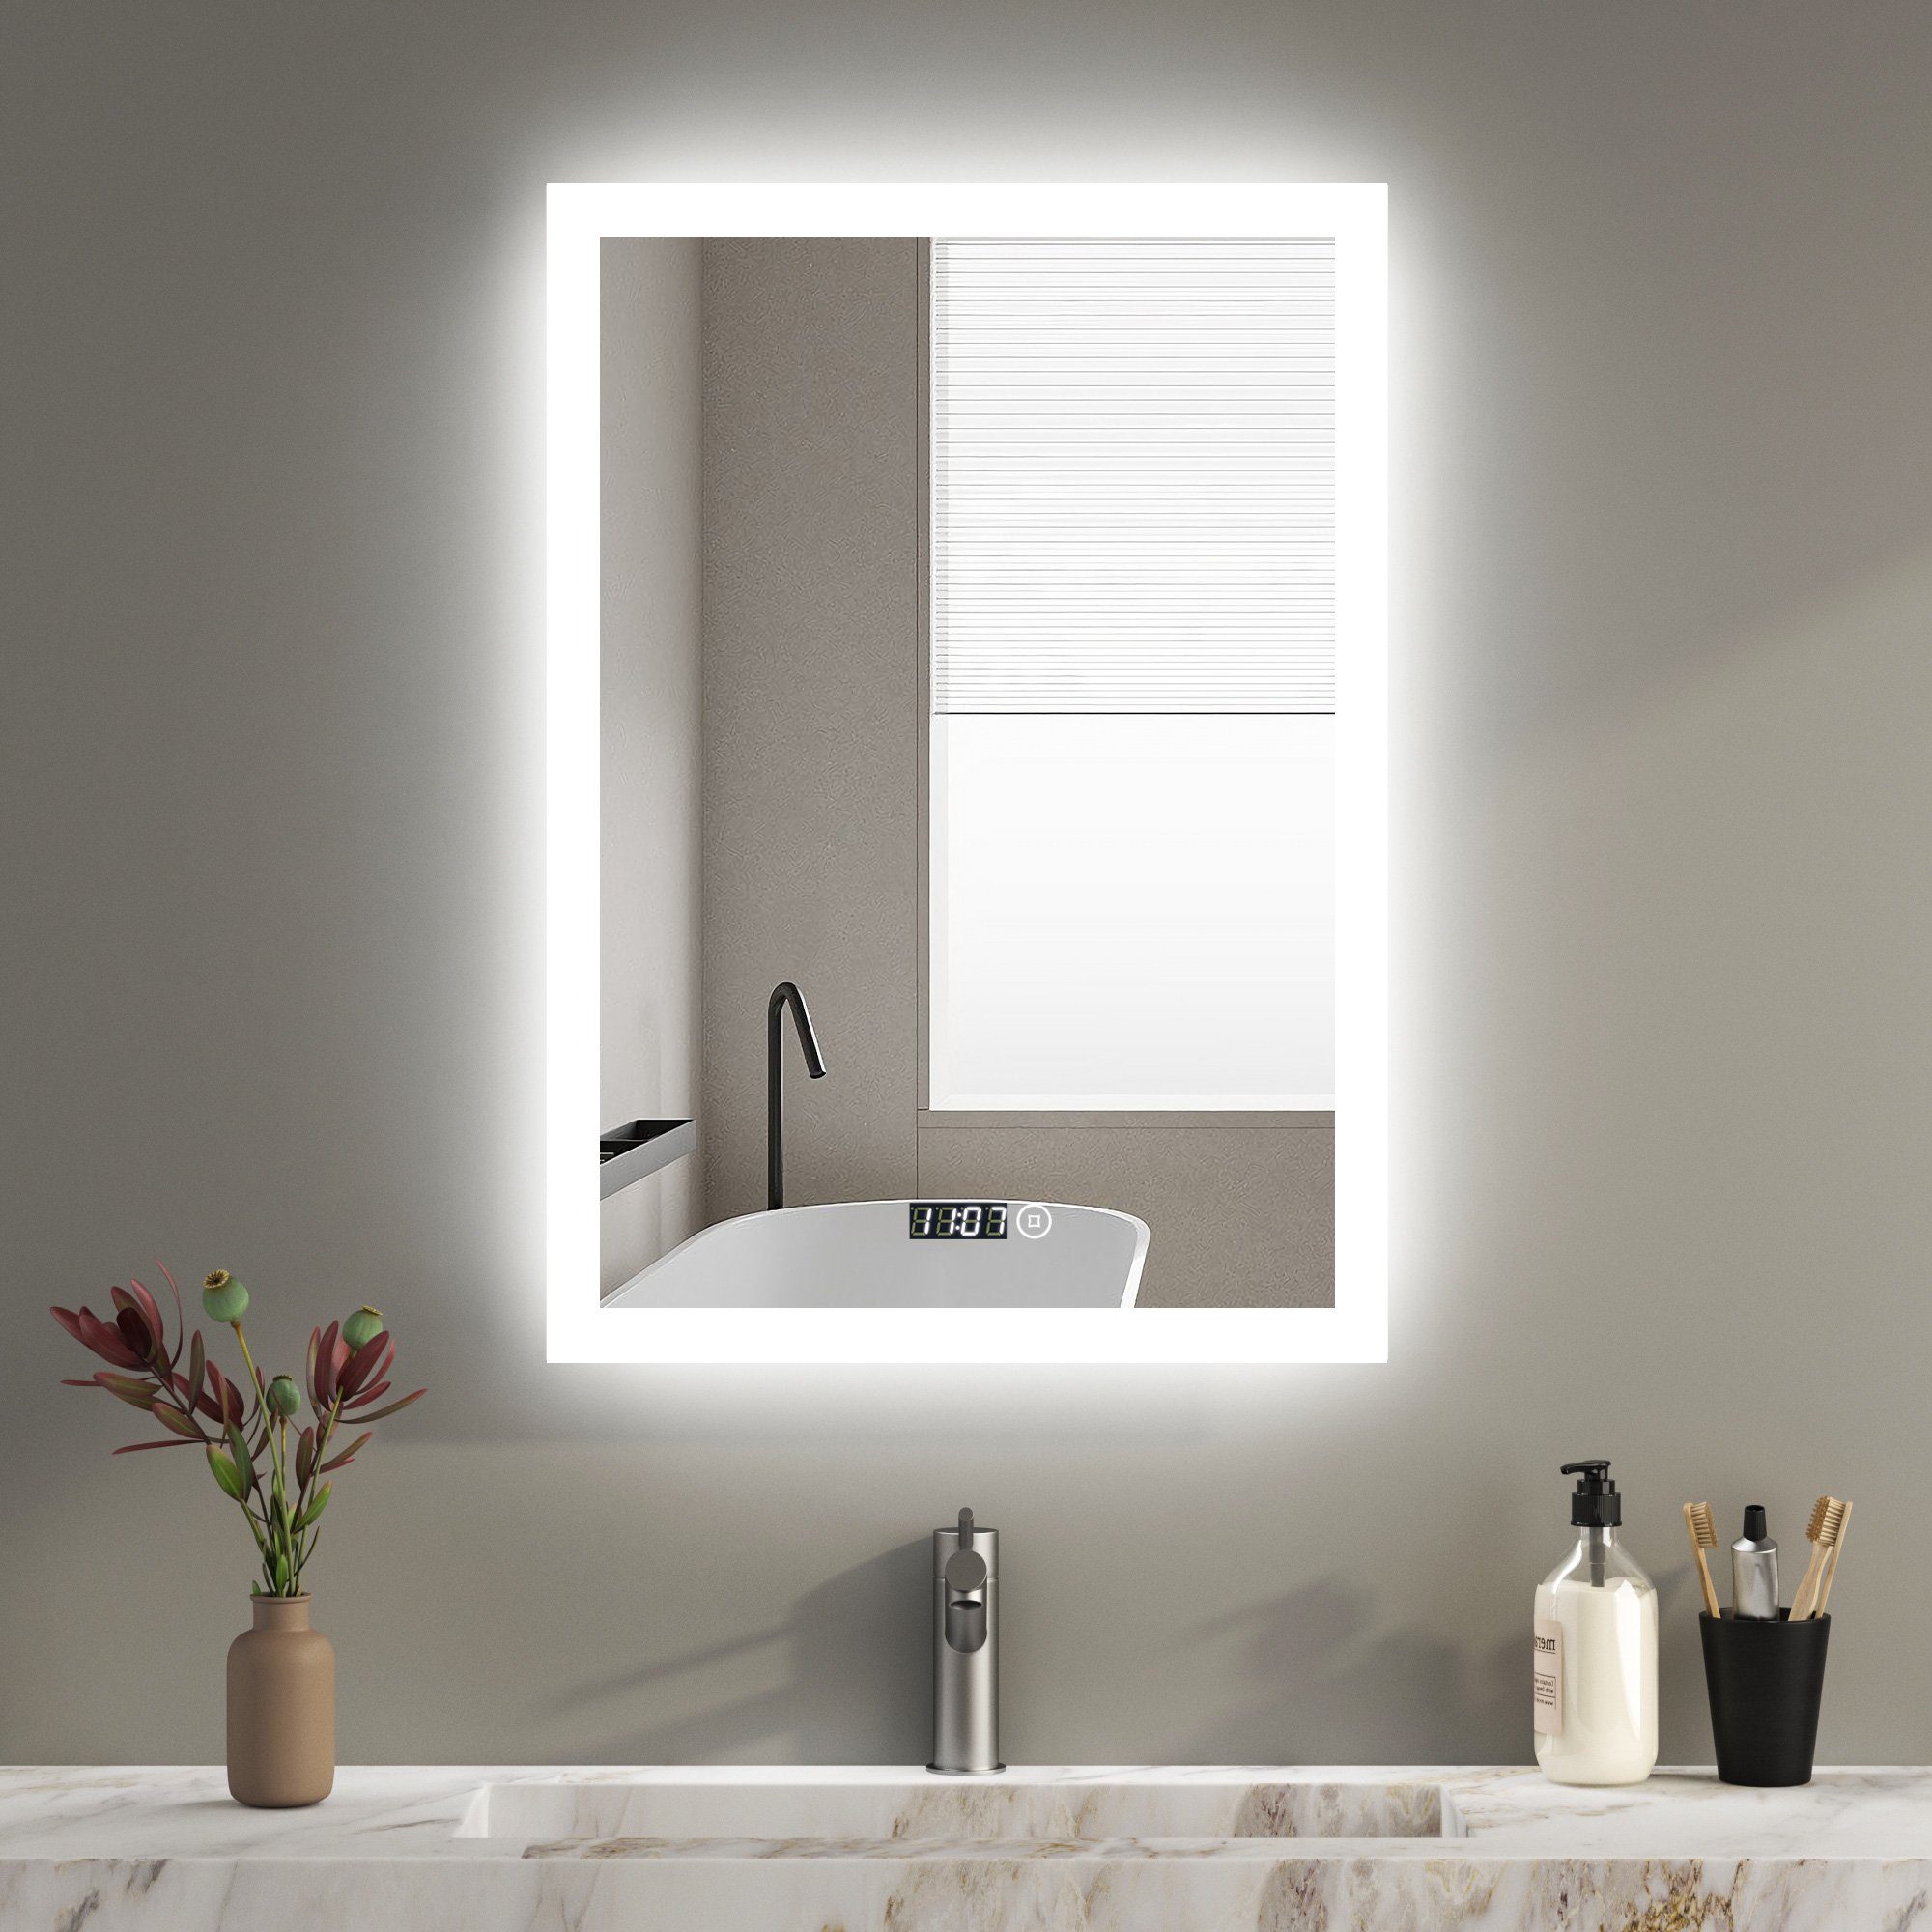 WDWRITTI Wandspiegel LED Badspiegel 50x70 Uhr Touch 3Lichtfarben Dimmbar Memrory (Wandspiegel mit Beleuchtung, 3000K/4000K/6500K), Energiesparende, IP44